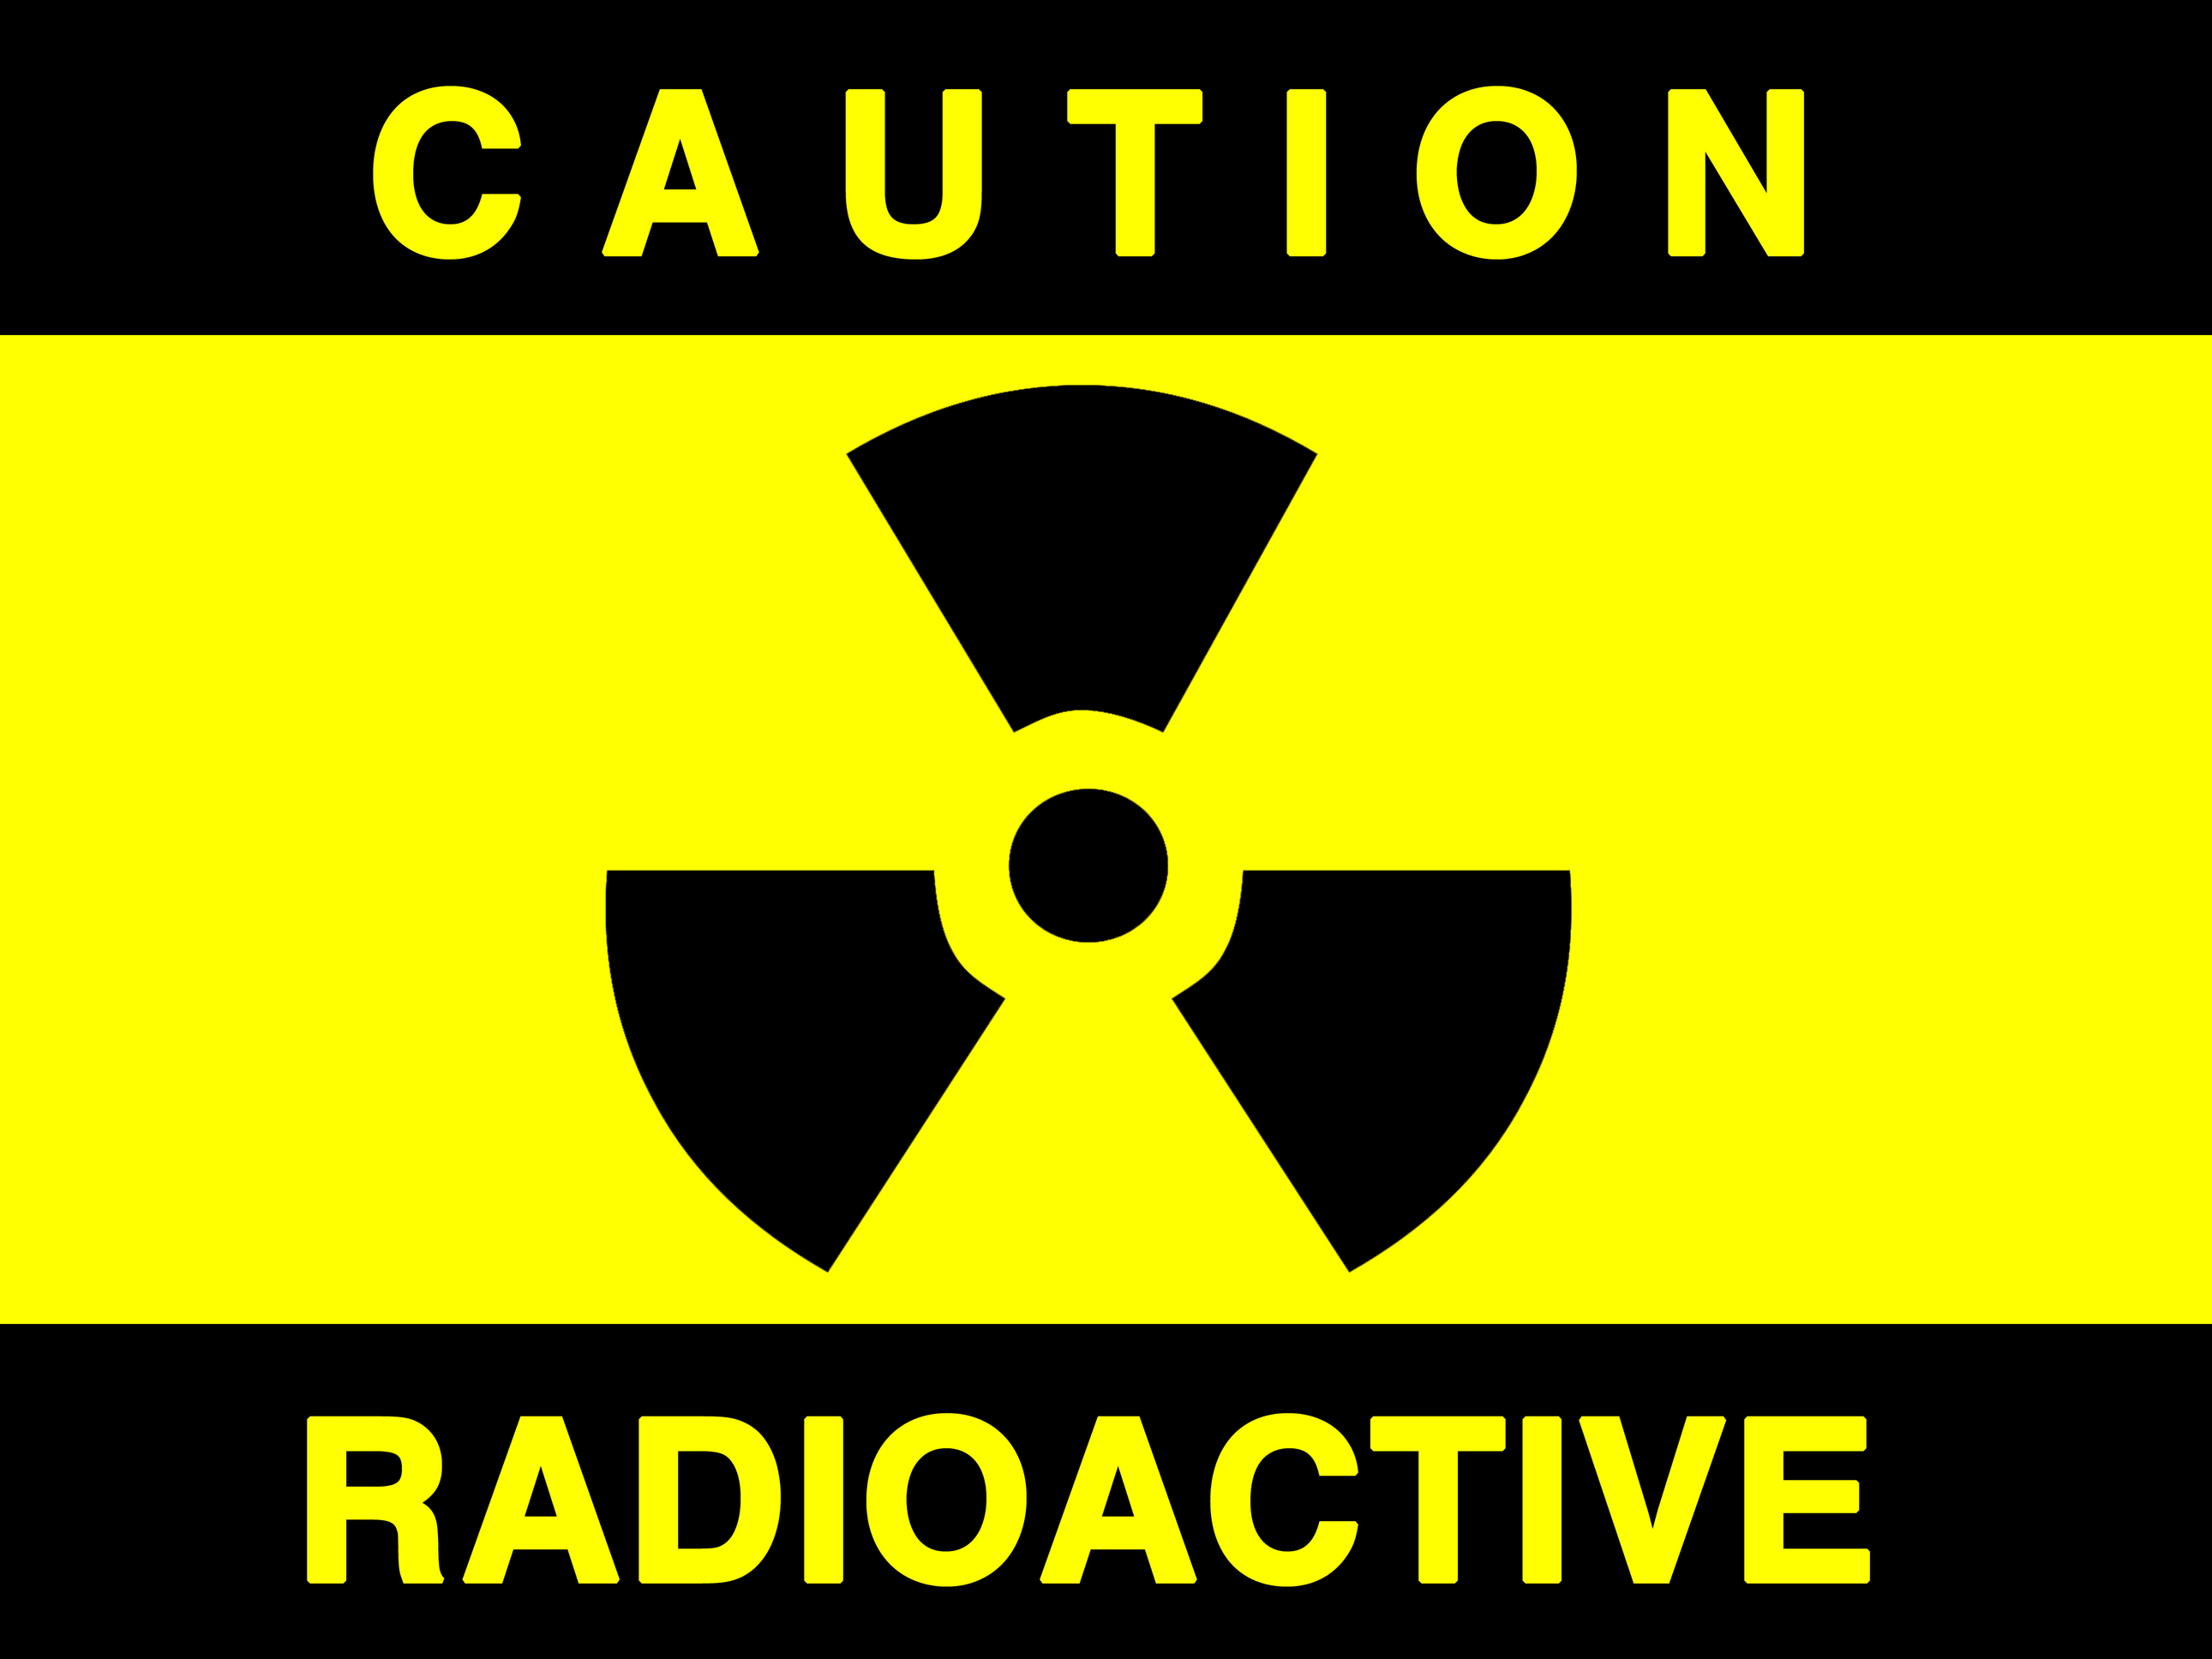 http://amal.net/wp-content/uploads/2014/01/hazard-poison-radioactive.jpg